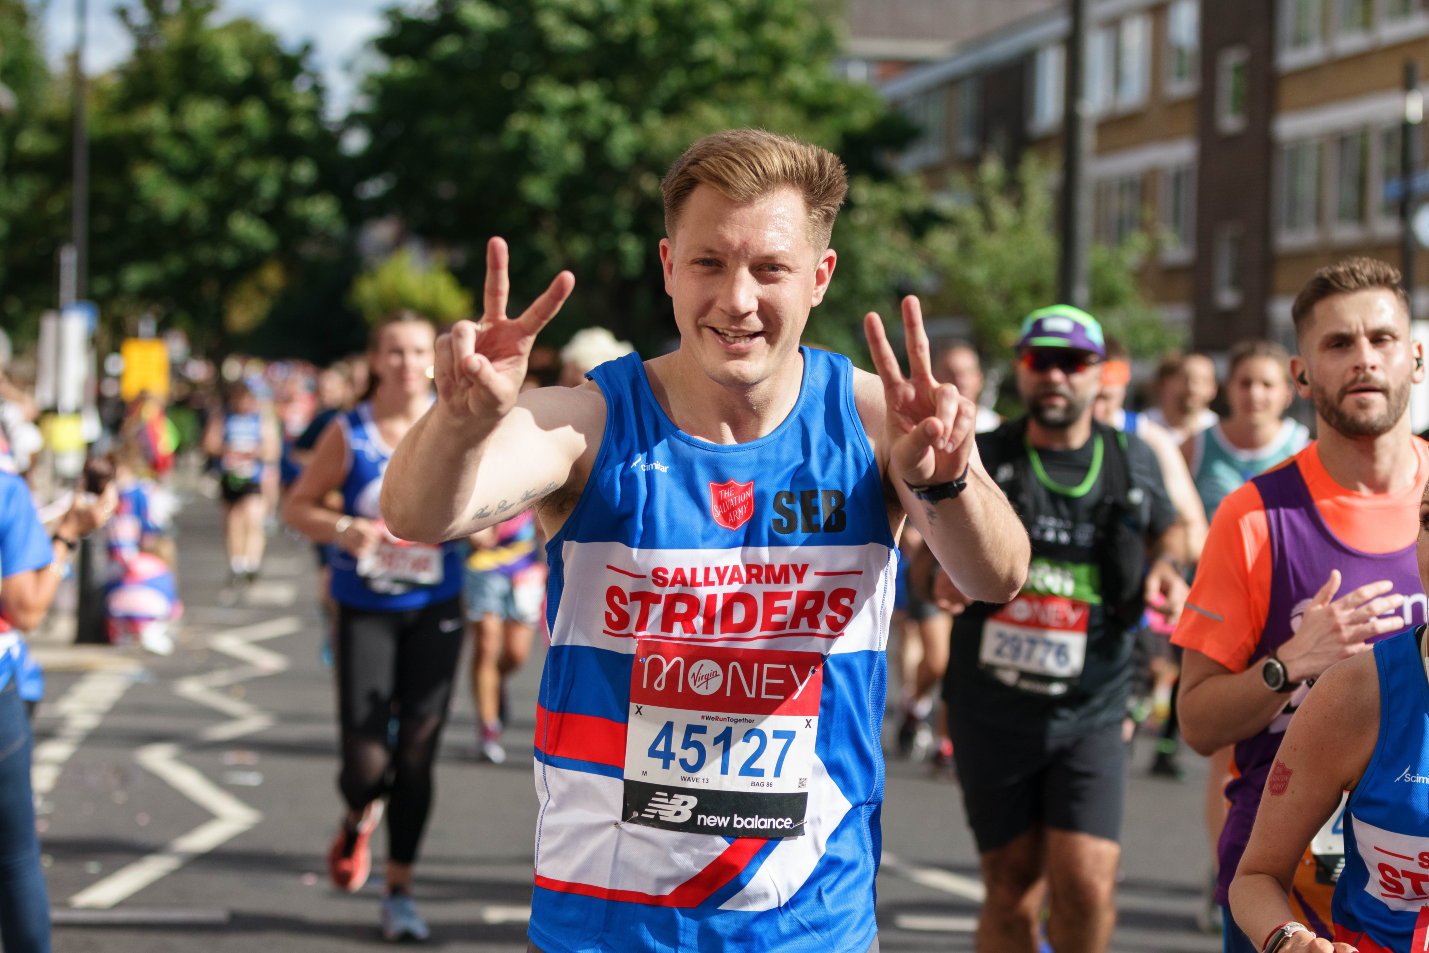 man running the London Marathon in Team Sally Army top